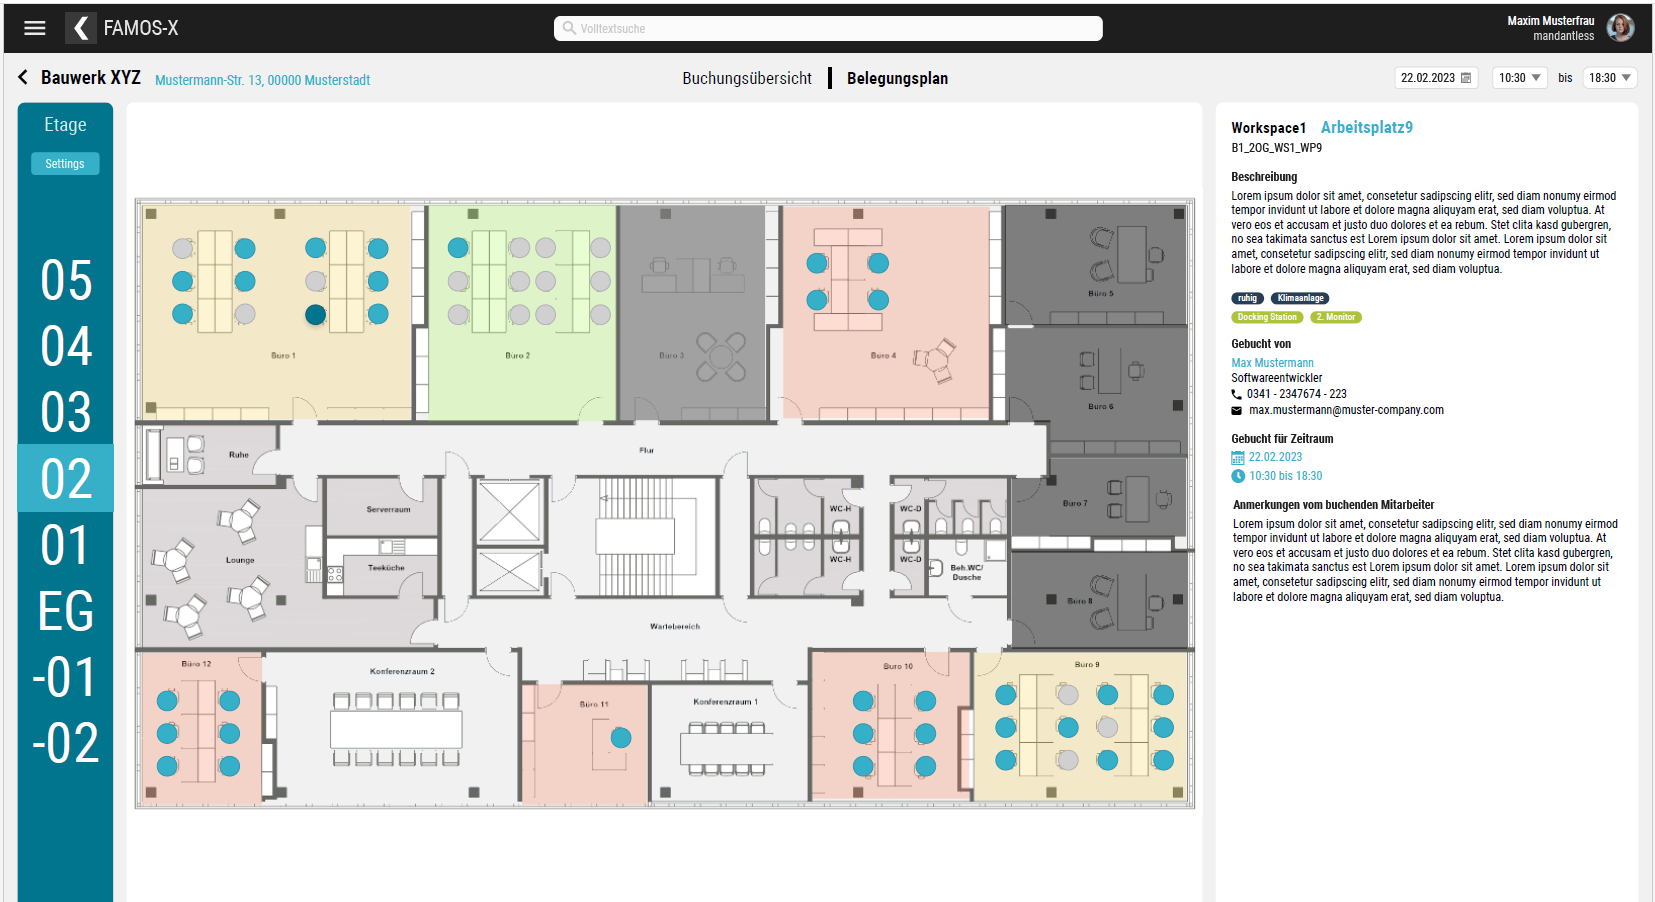 Dashboard occupancy plan with detailed information (screenshot)